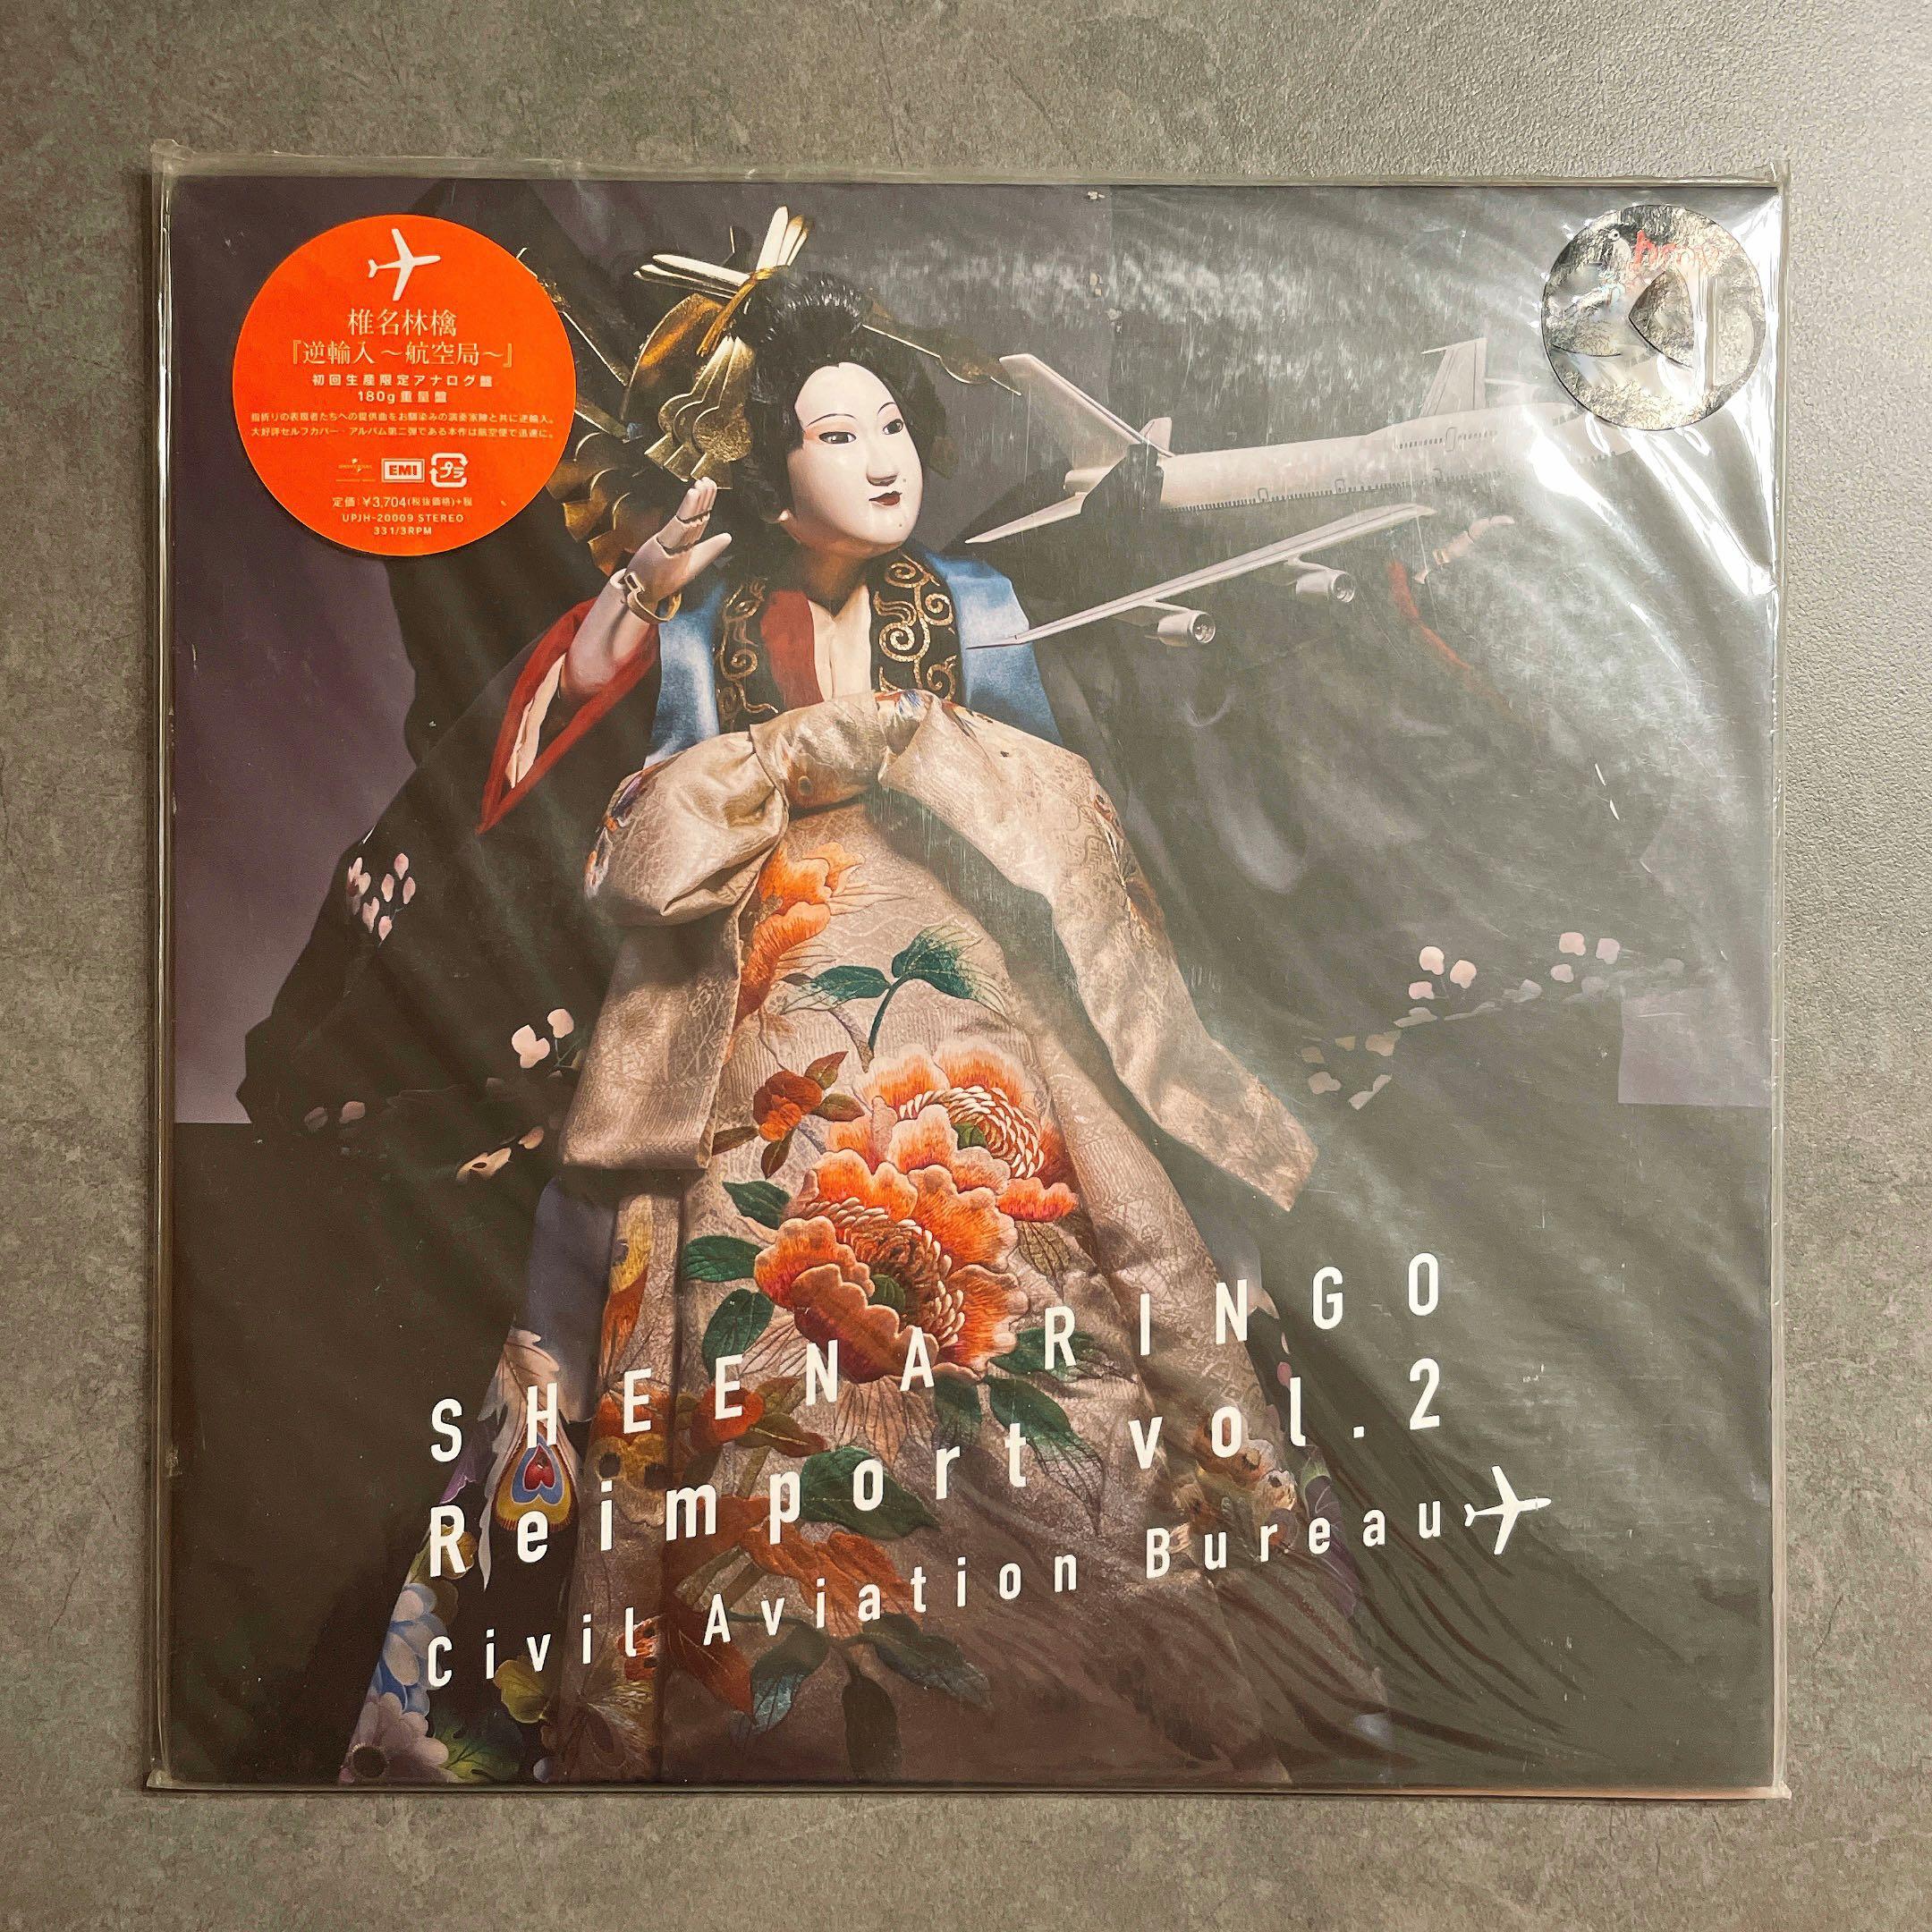 椎名林檎Sheena Ringo Reimport Vinyl LP 黑膠not CD album, 興趣及 